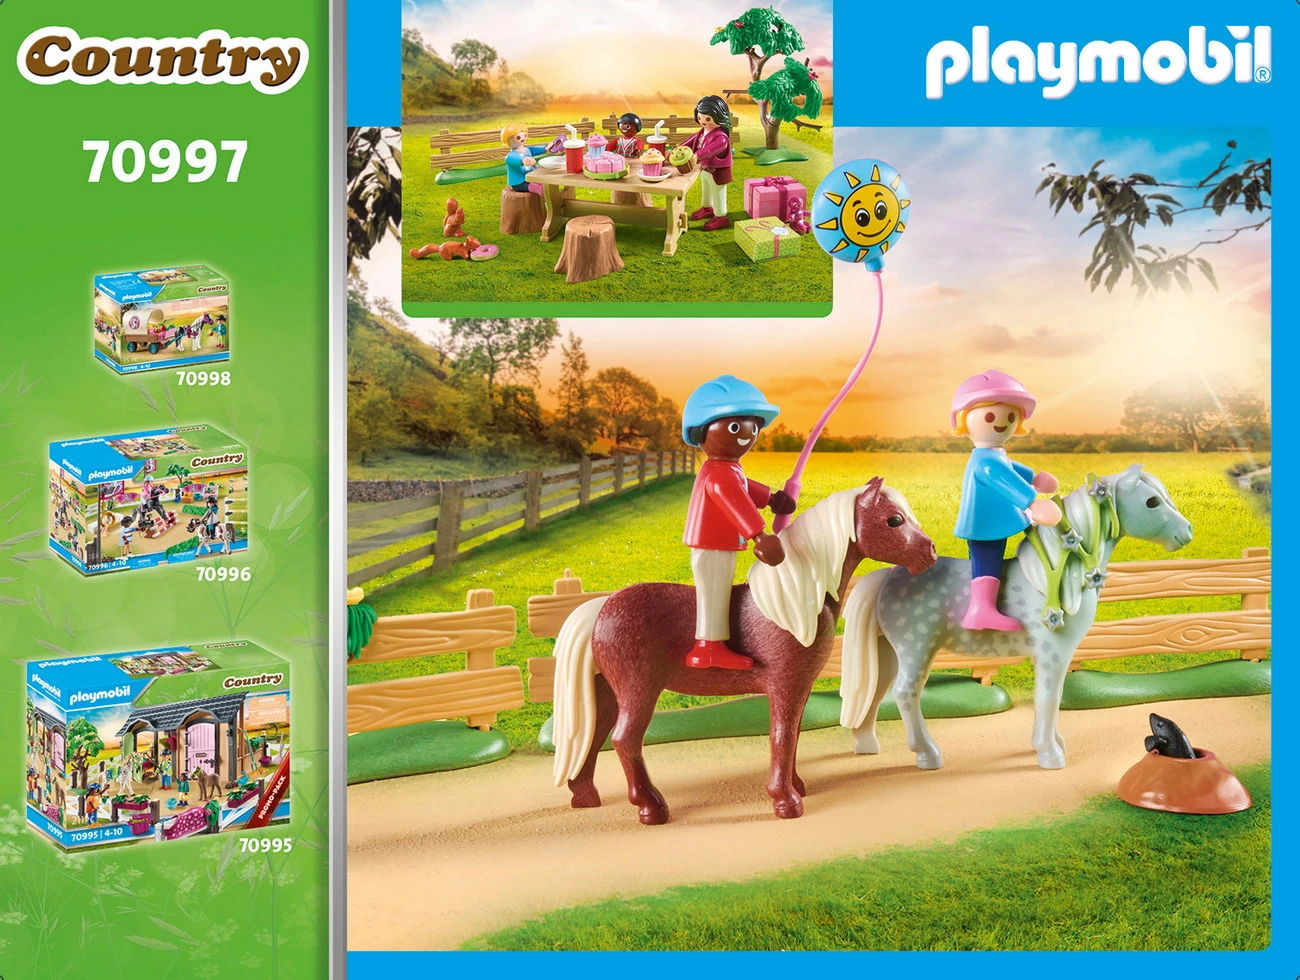 Playmobil 70997 - Kindergeburtstag auf dem Ponyhof (Country)